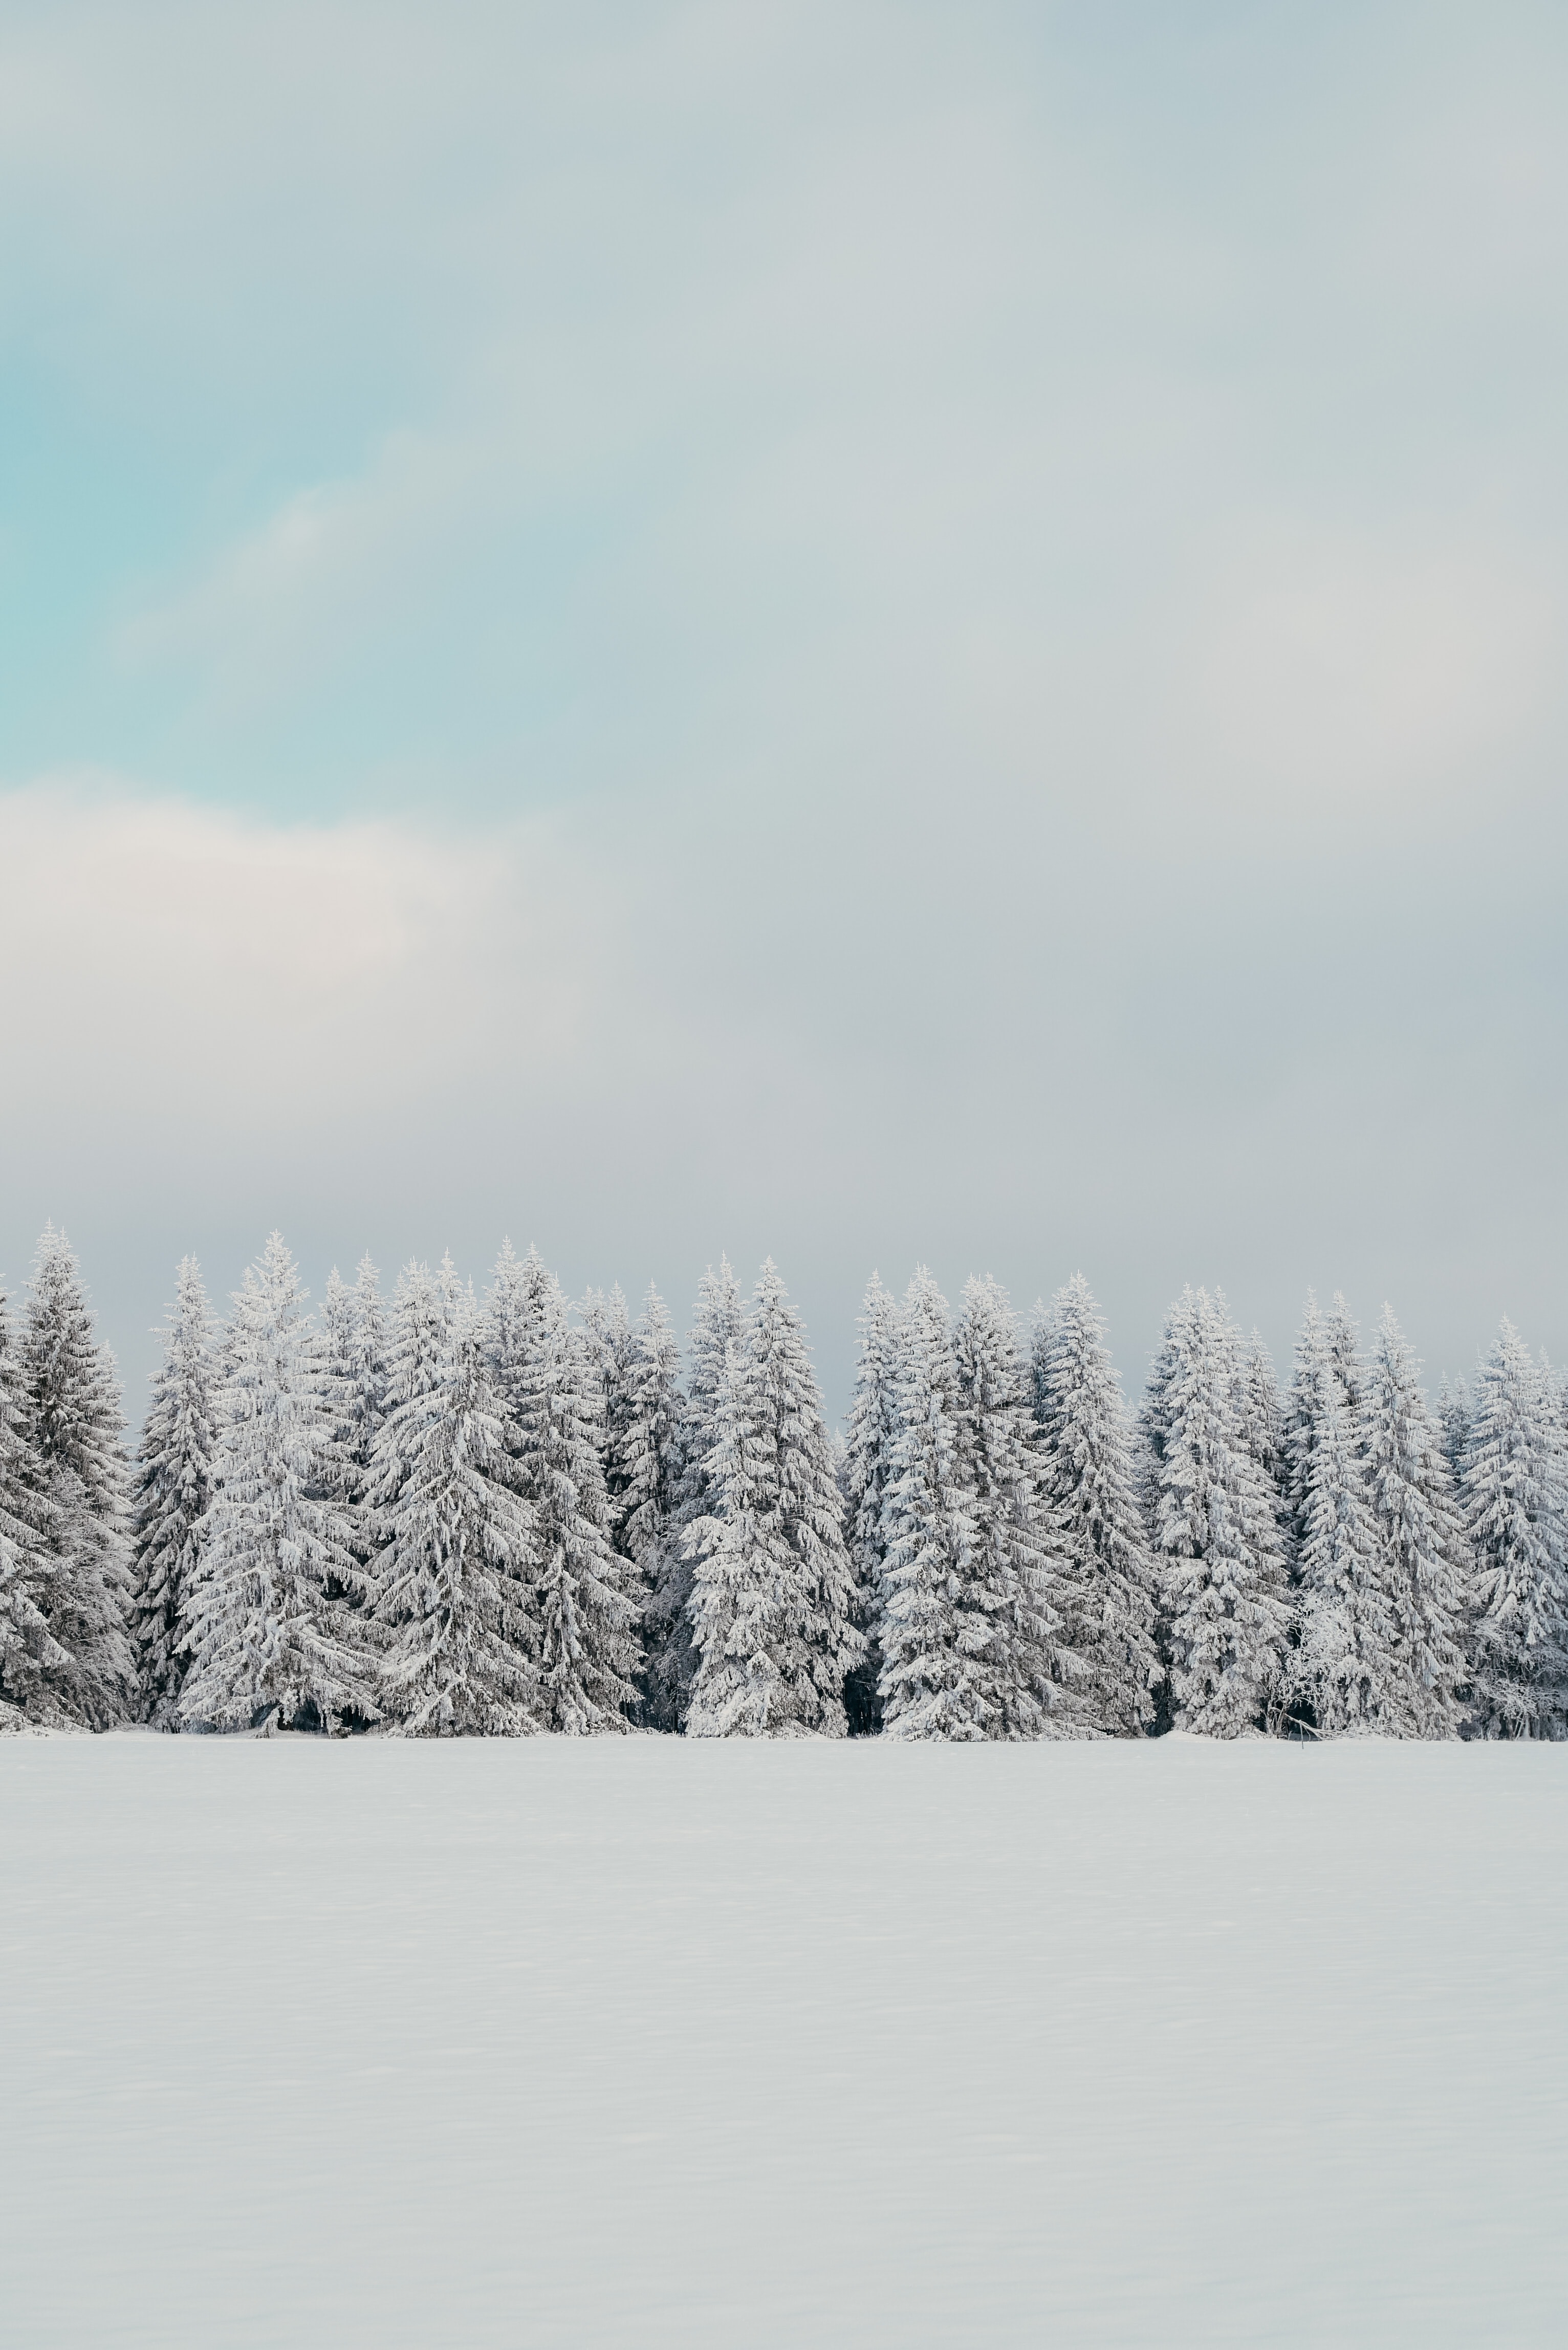 Full HD winter, nature, trees, snow, fir trees, white